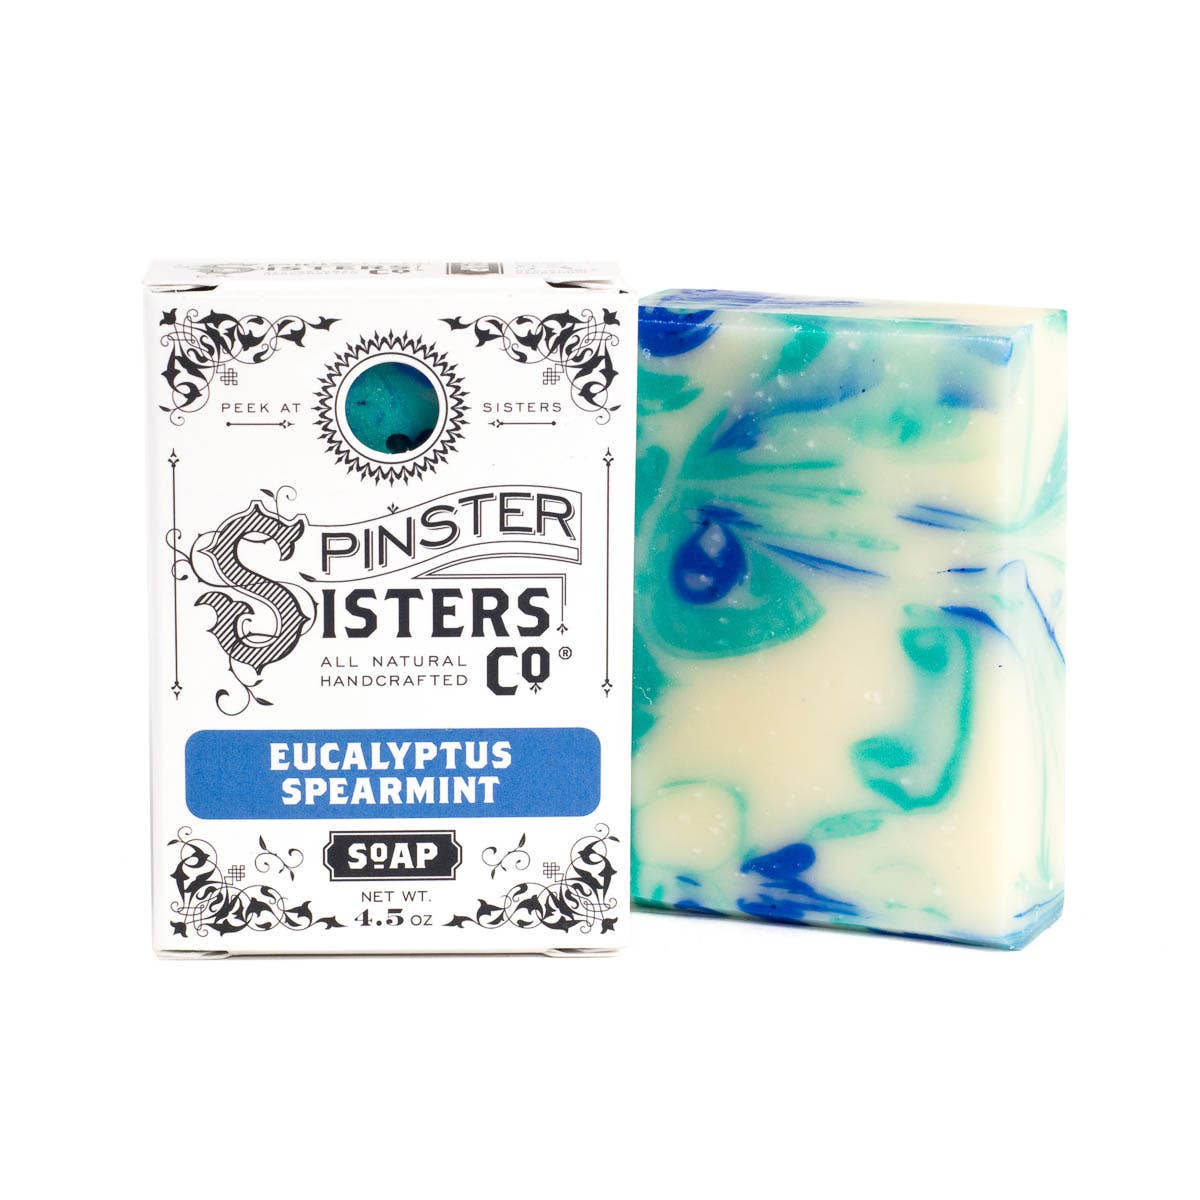 Spinster Sisters Co. Bar Soap 4.5 oz eucalyptus